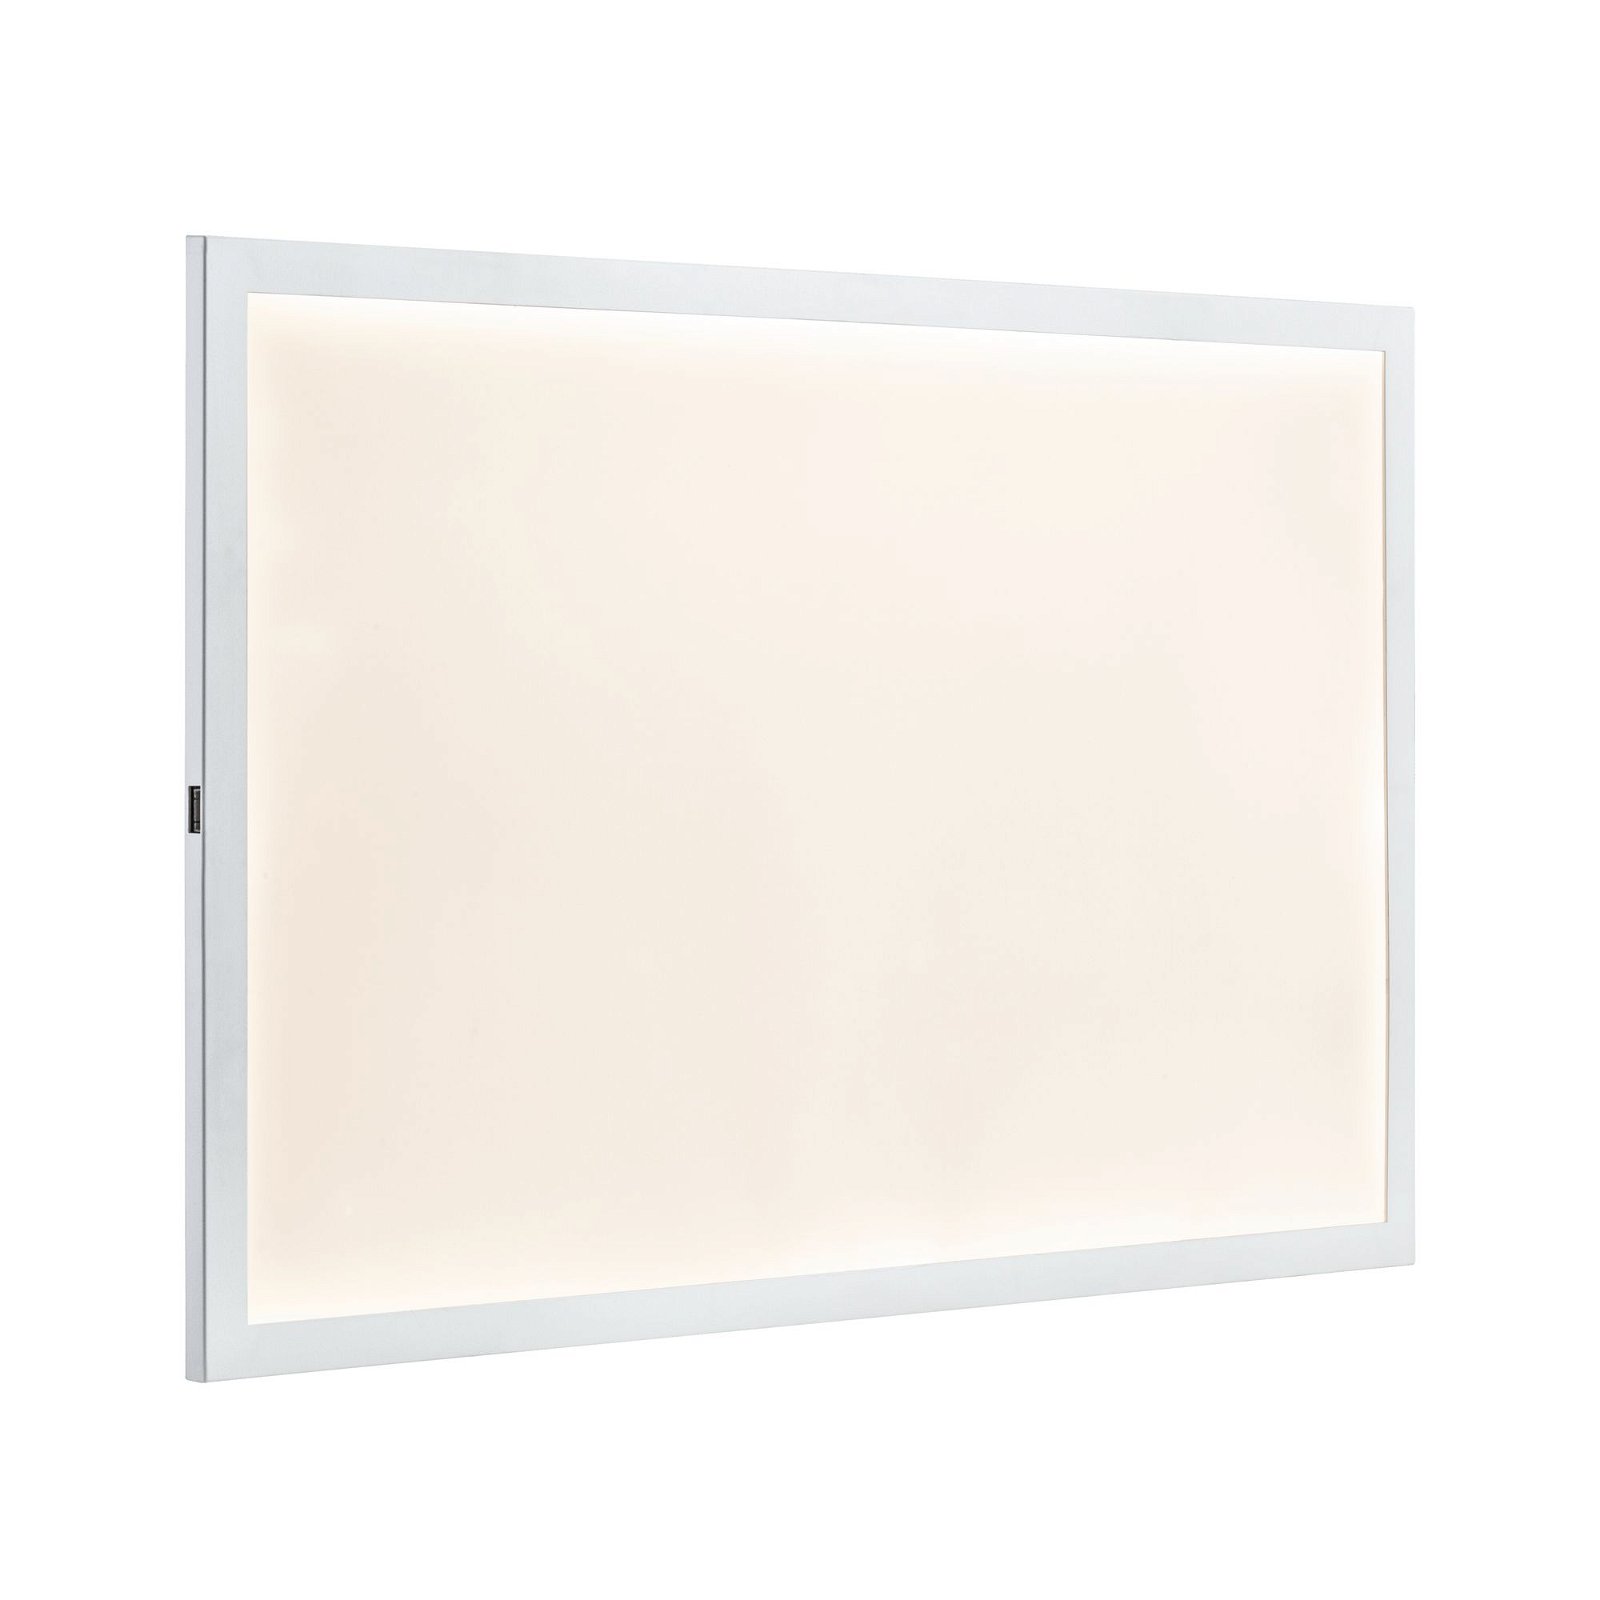 LED Panel Glow 8 W White Warm white Expansion